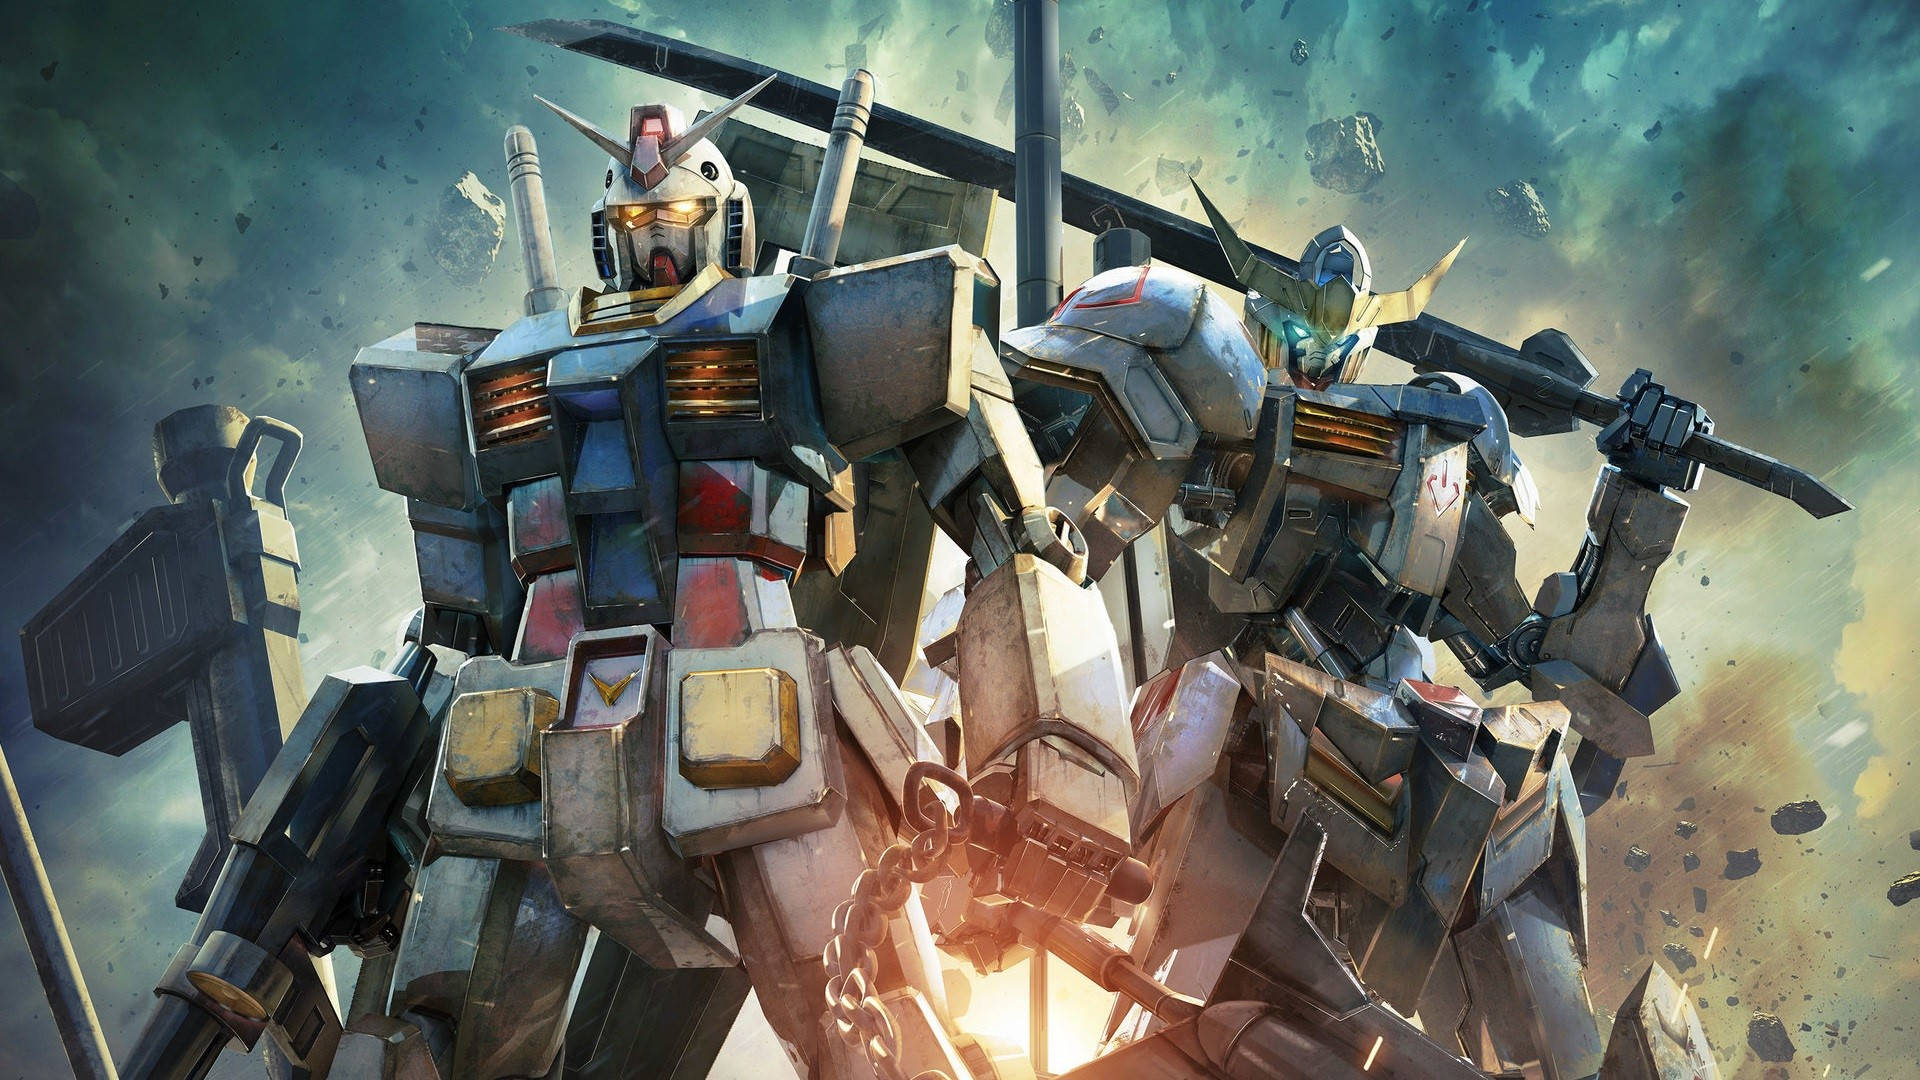 Gundam Robots Holding Their Weapons